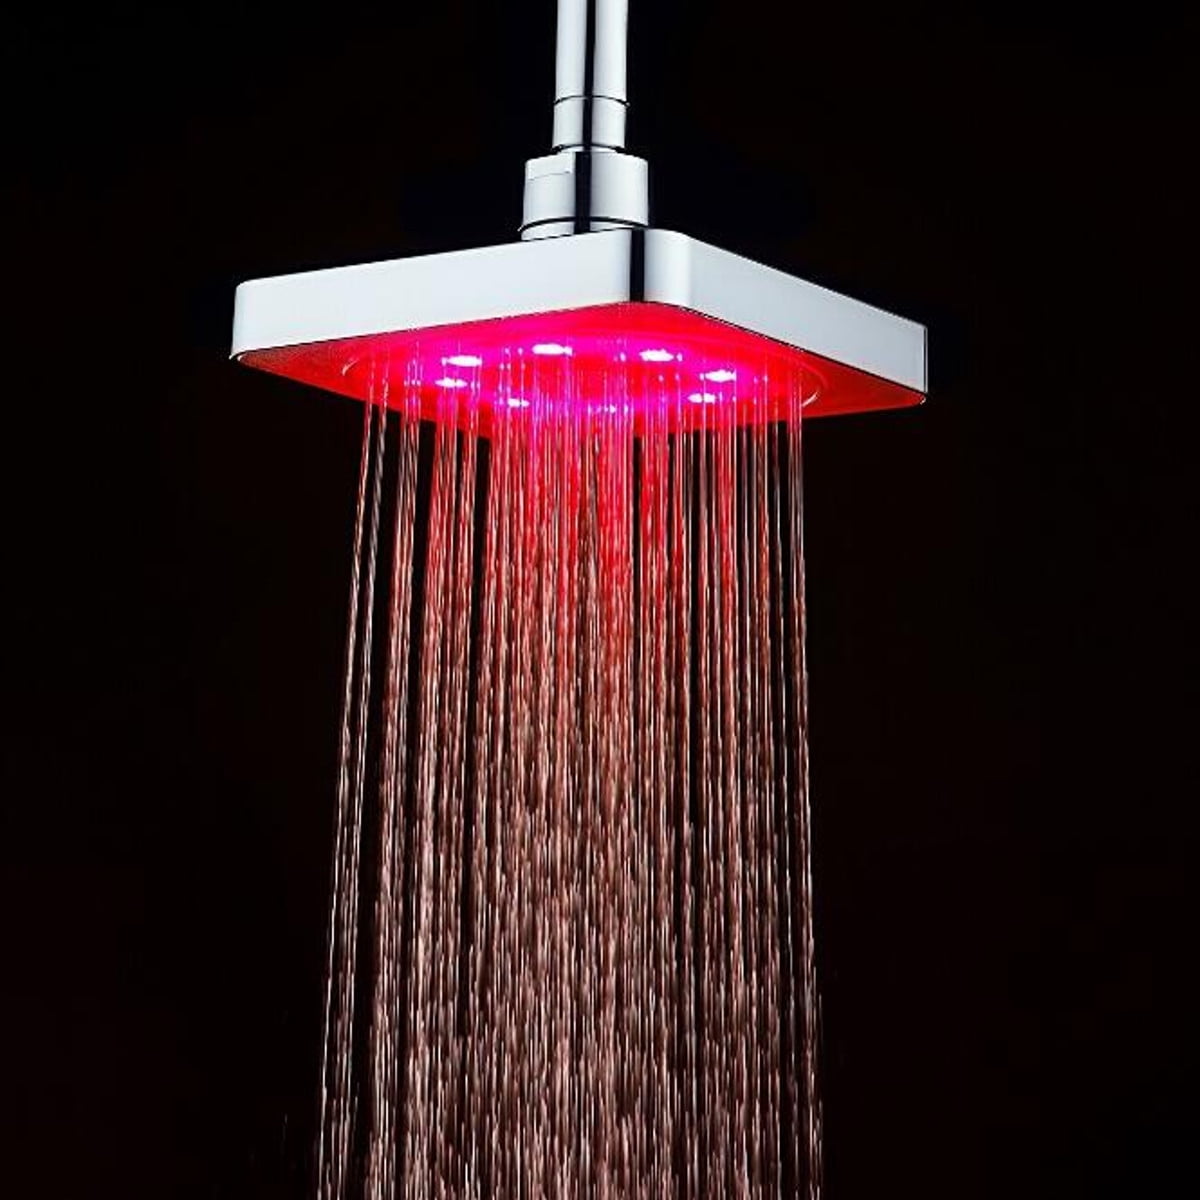 8 Inch Square LED Rainfall Shower Head Top Sprayer Chrome  For Home Bathroom 